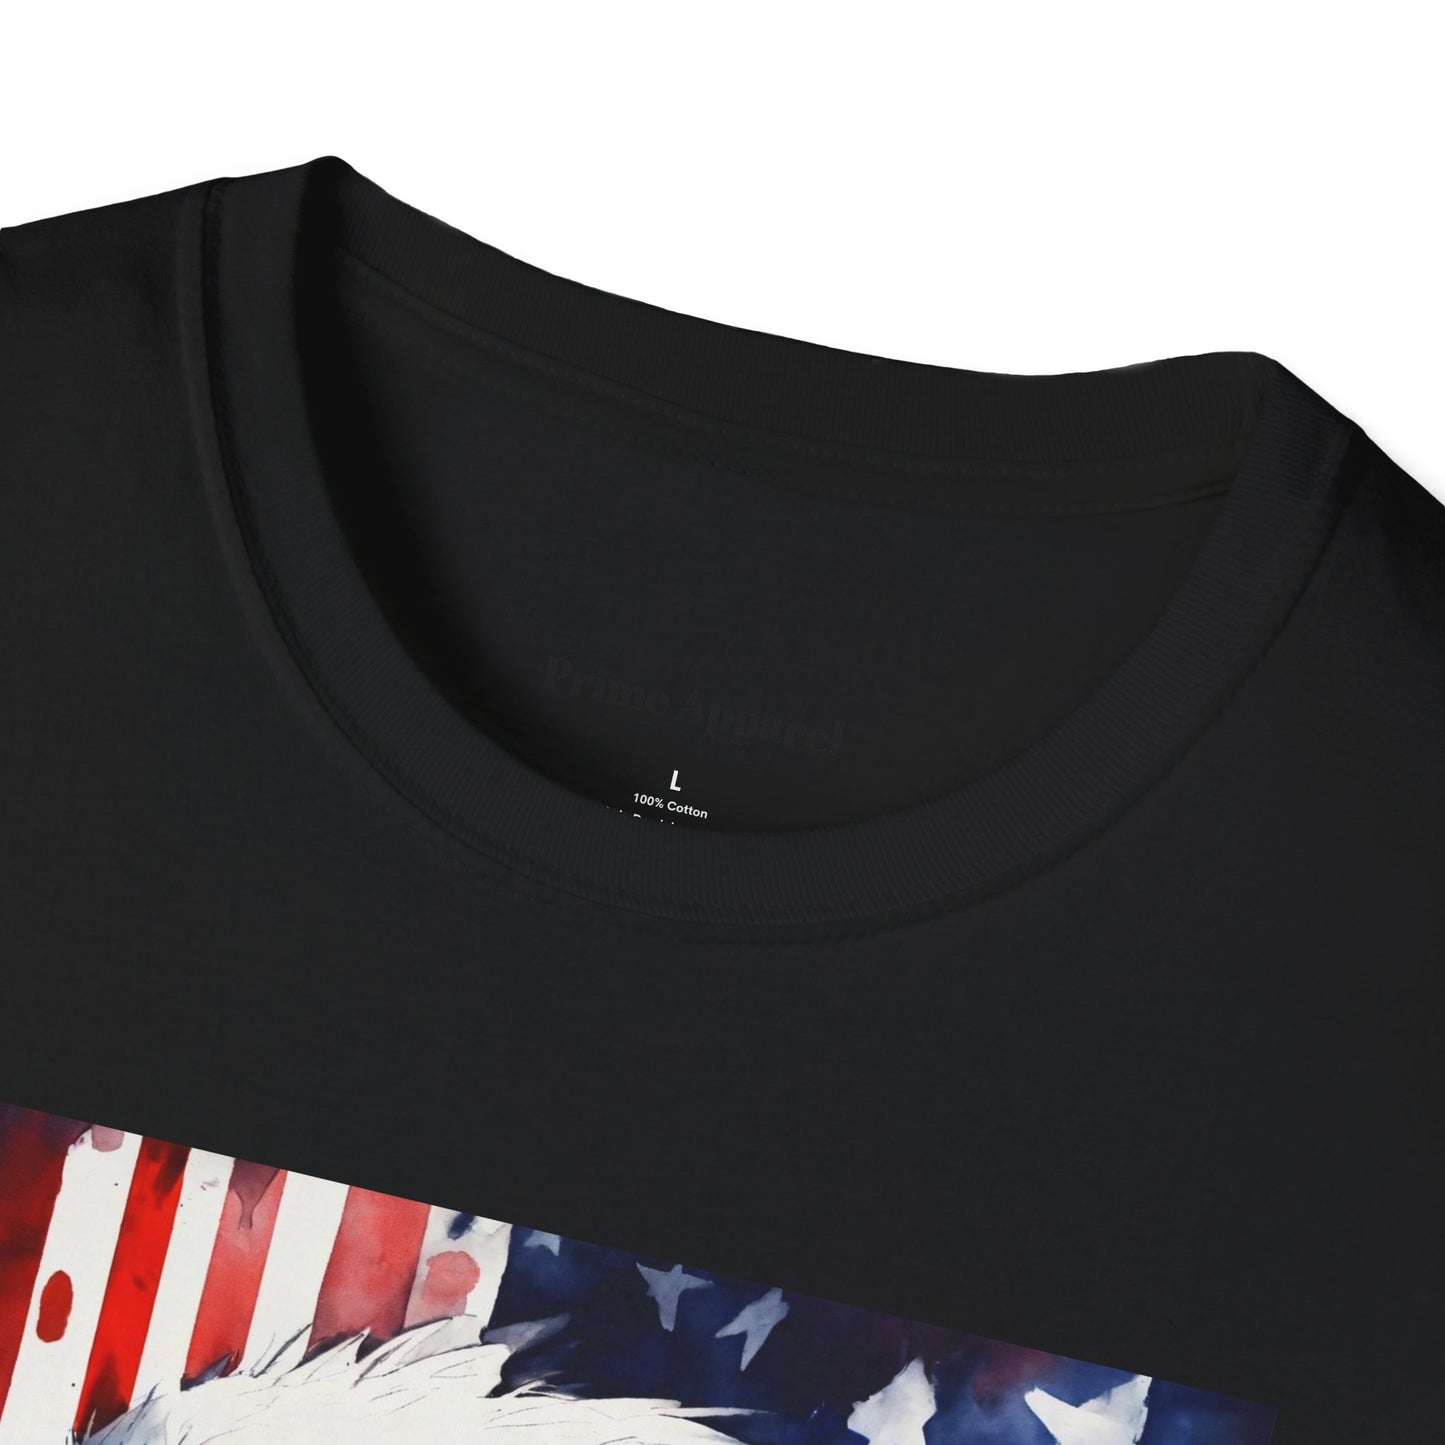 American Eagle XX2 T-Shirt